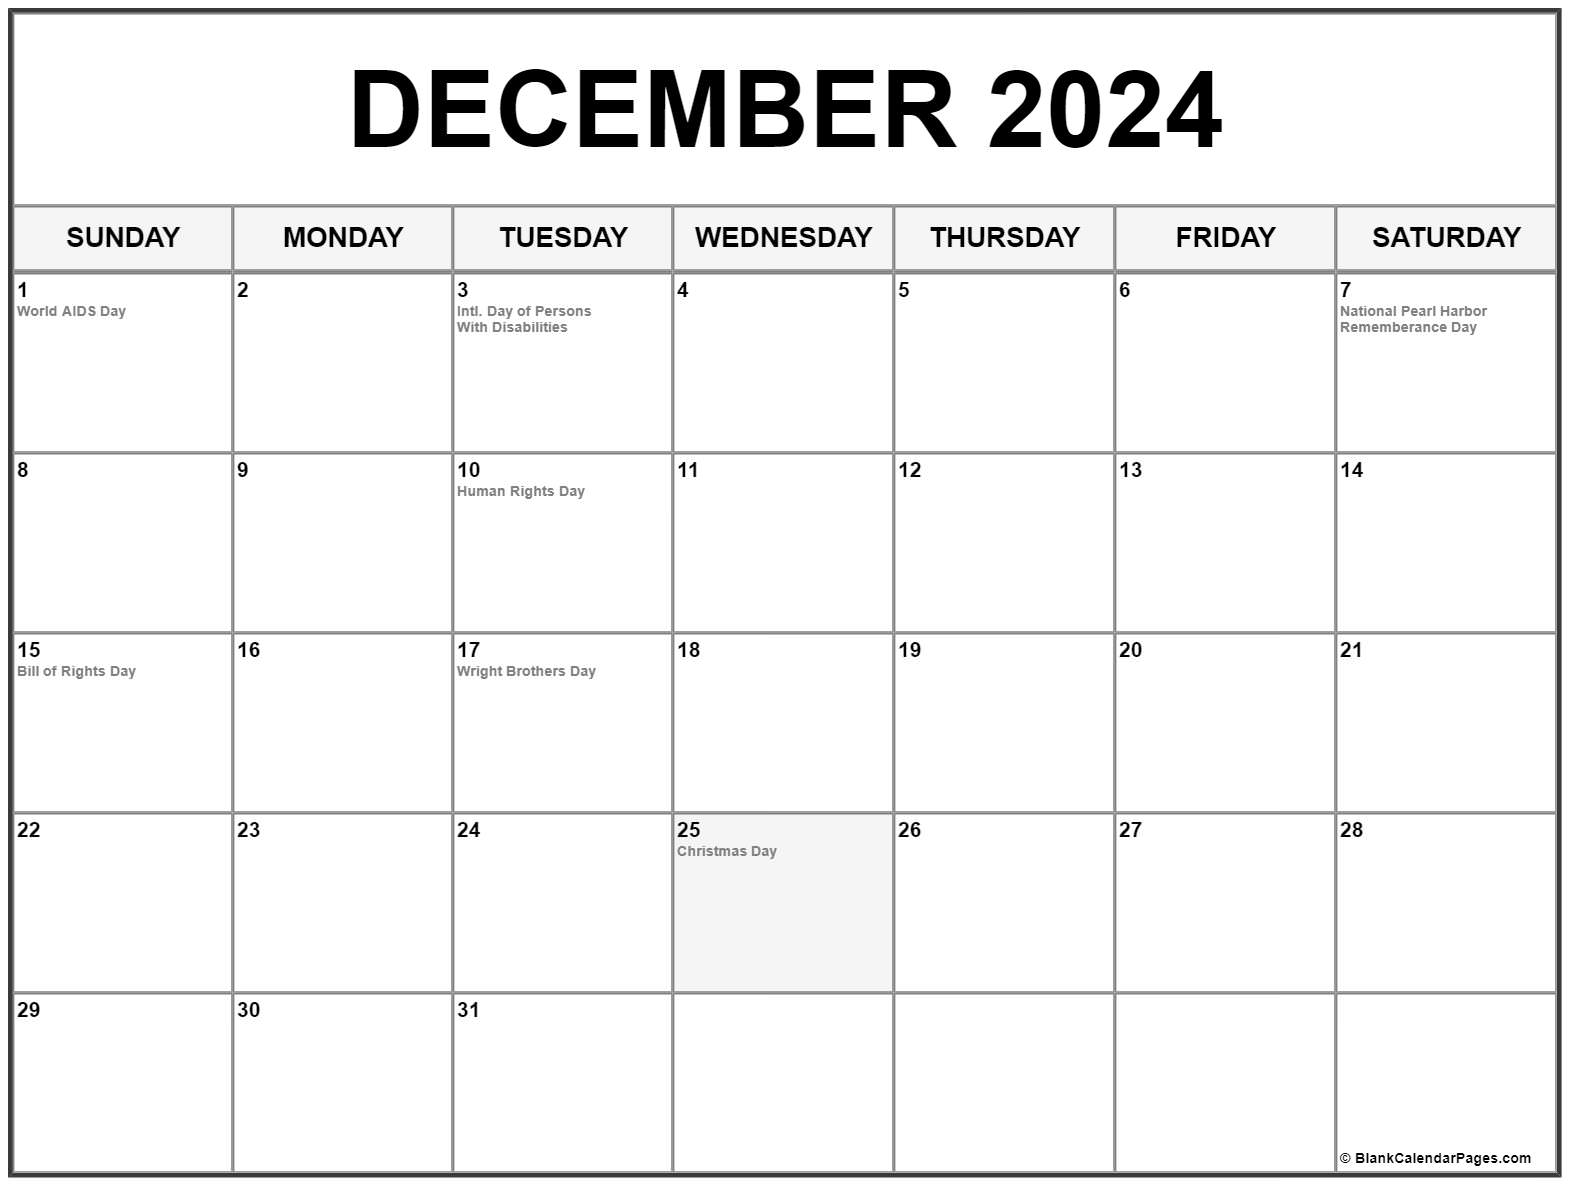 December 3 2024 Holiday tori sharyl